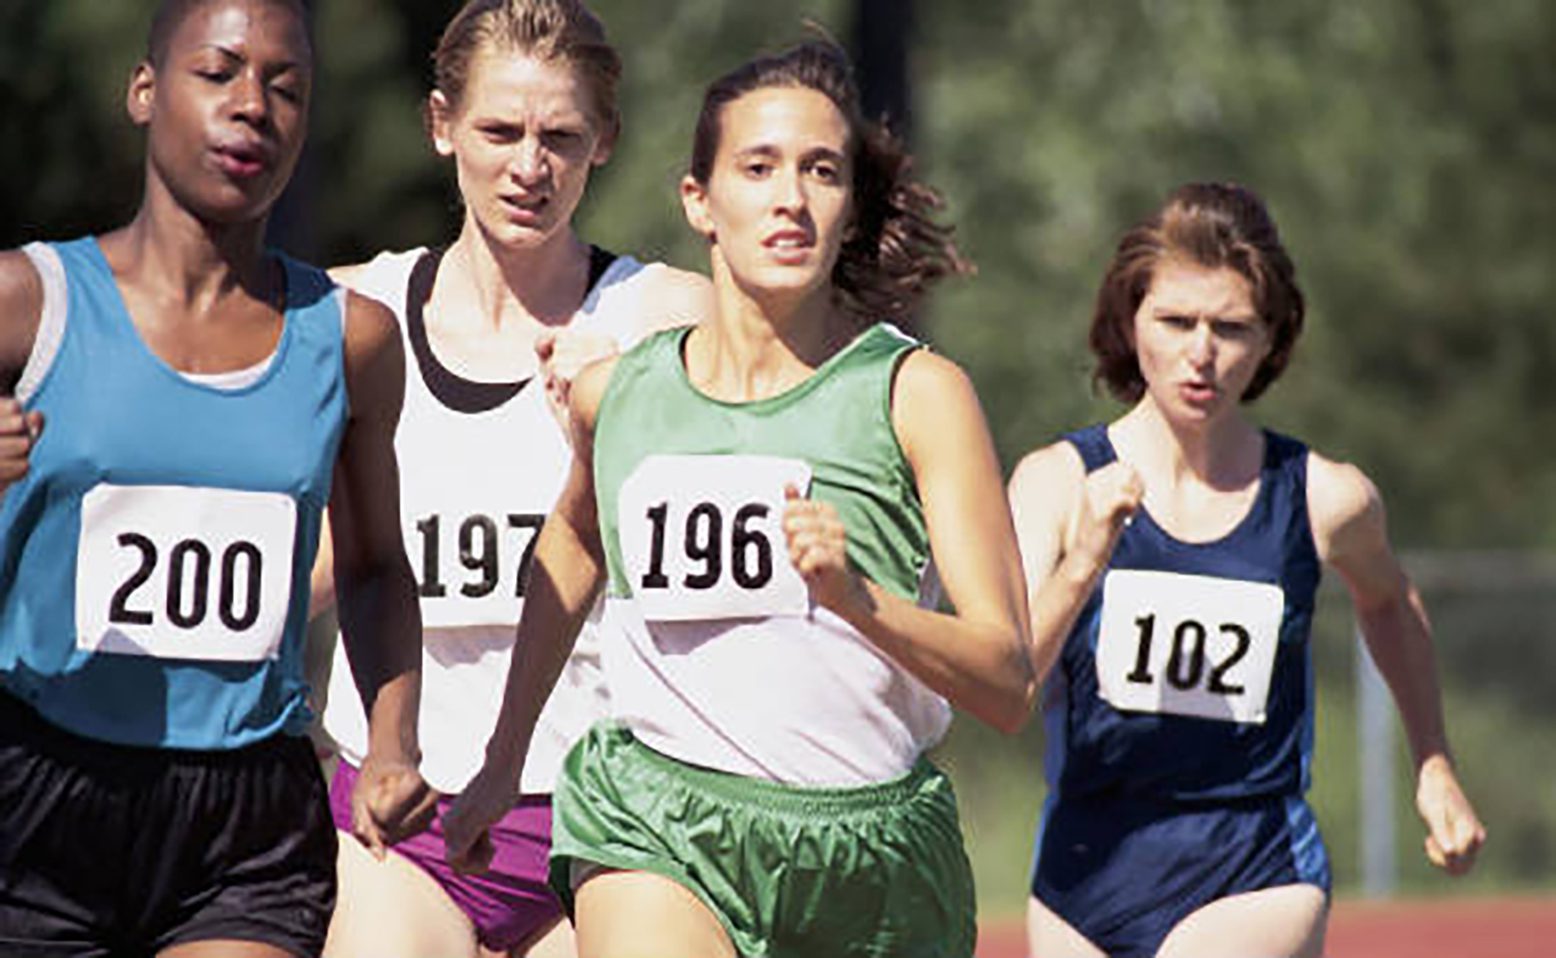 Diverese athletes running in a marathon